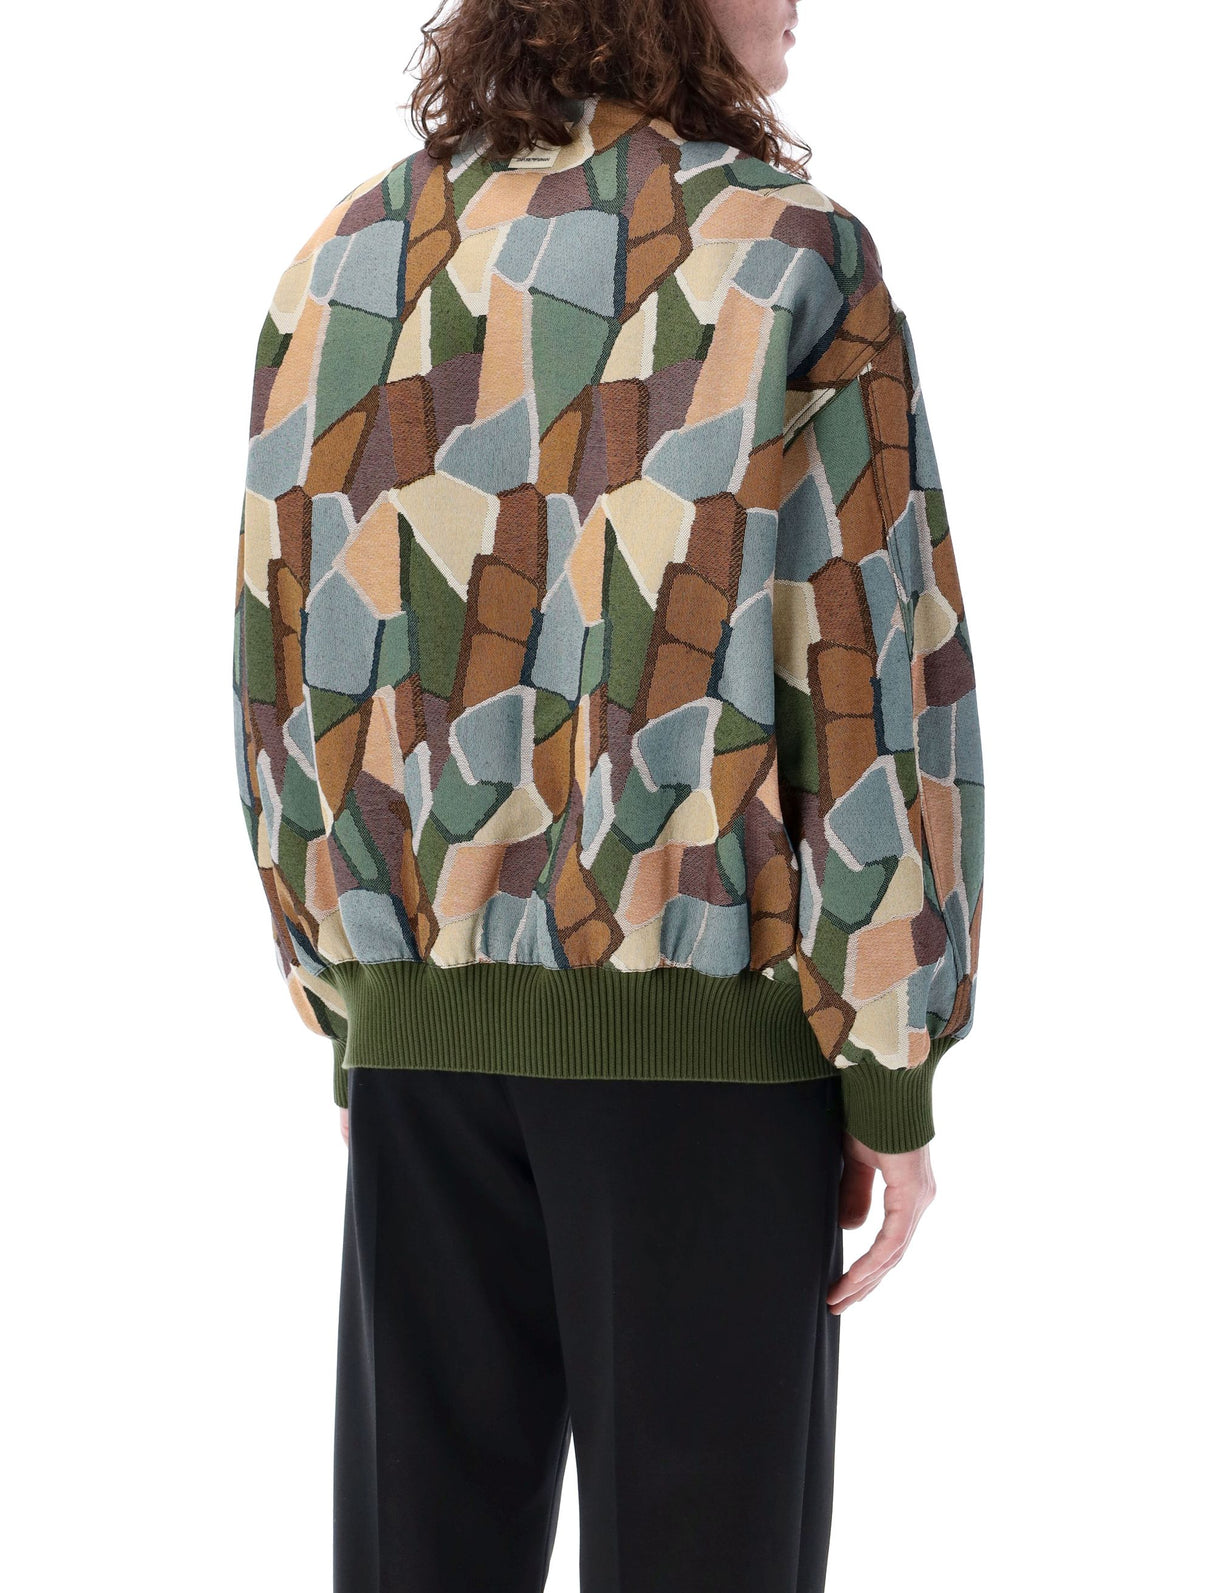 EMPORIO ARMANI Multicolor Cotton Blend Jacquard Bomber Jacket for Men